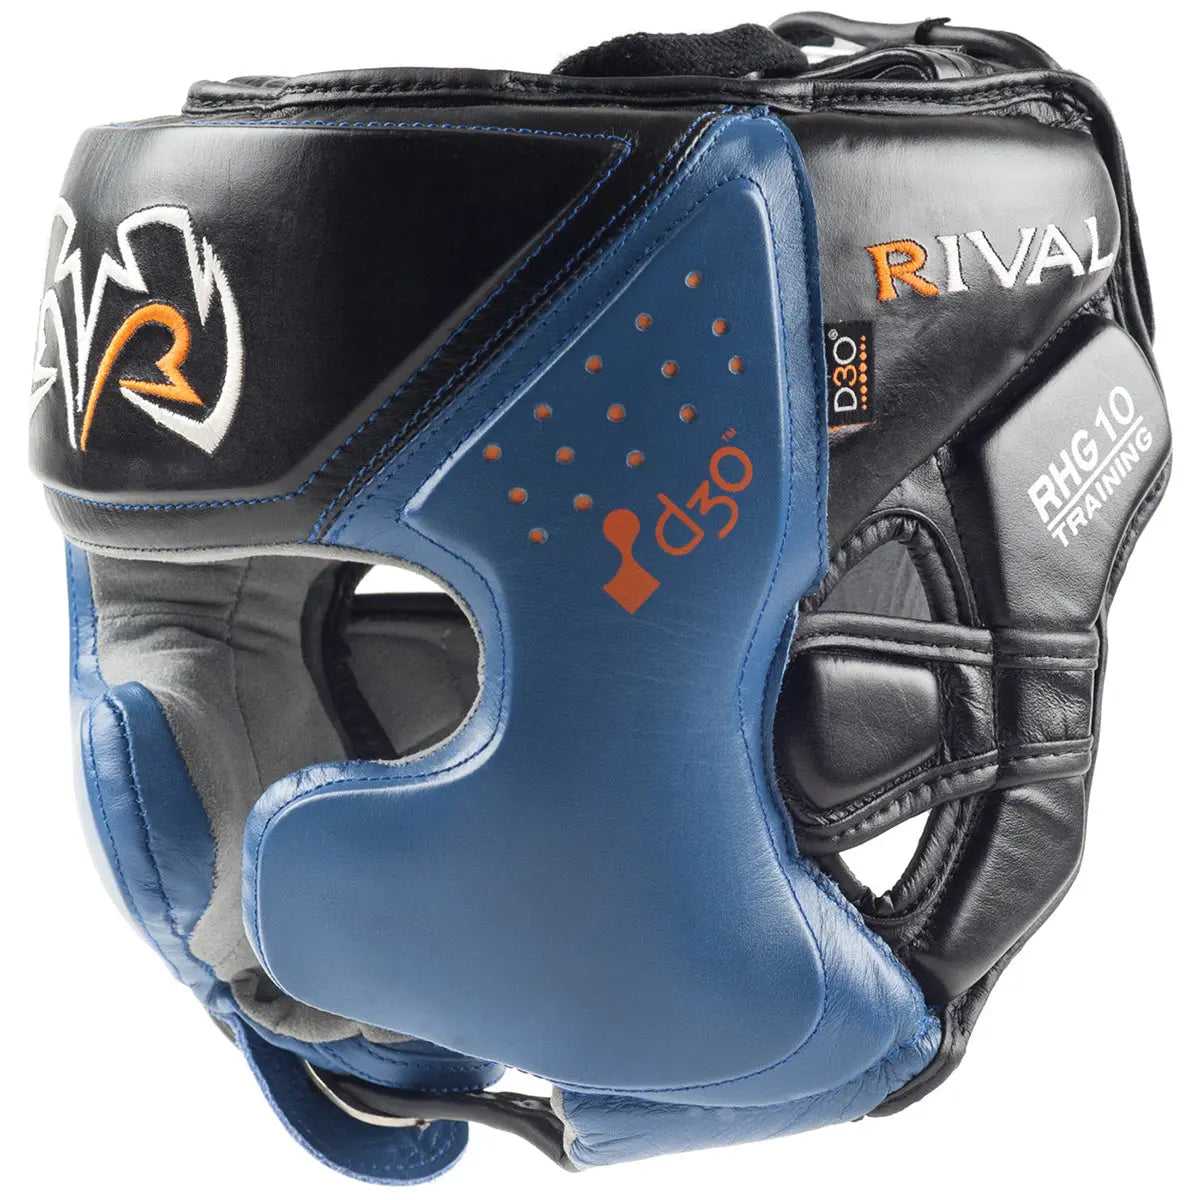 RIVAL Boxing RHG10 Intelli-Shock Headgear RIVAL